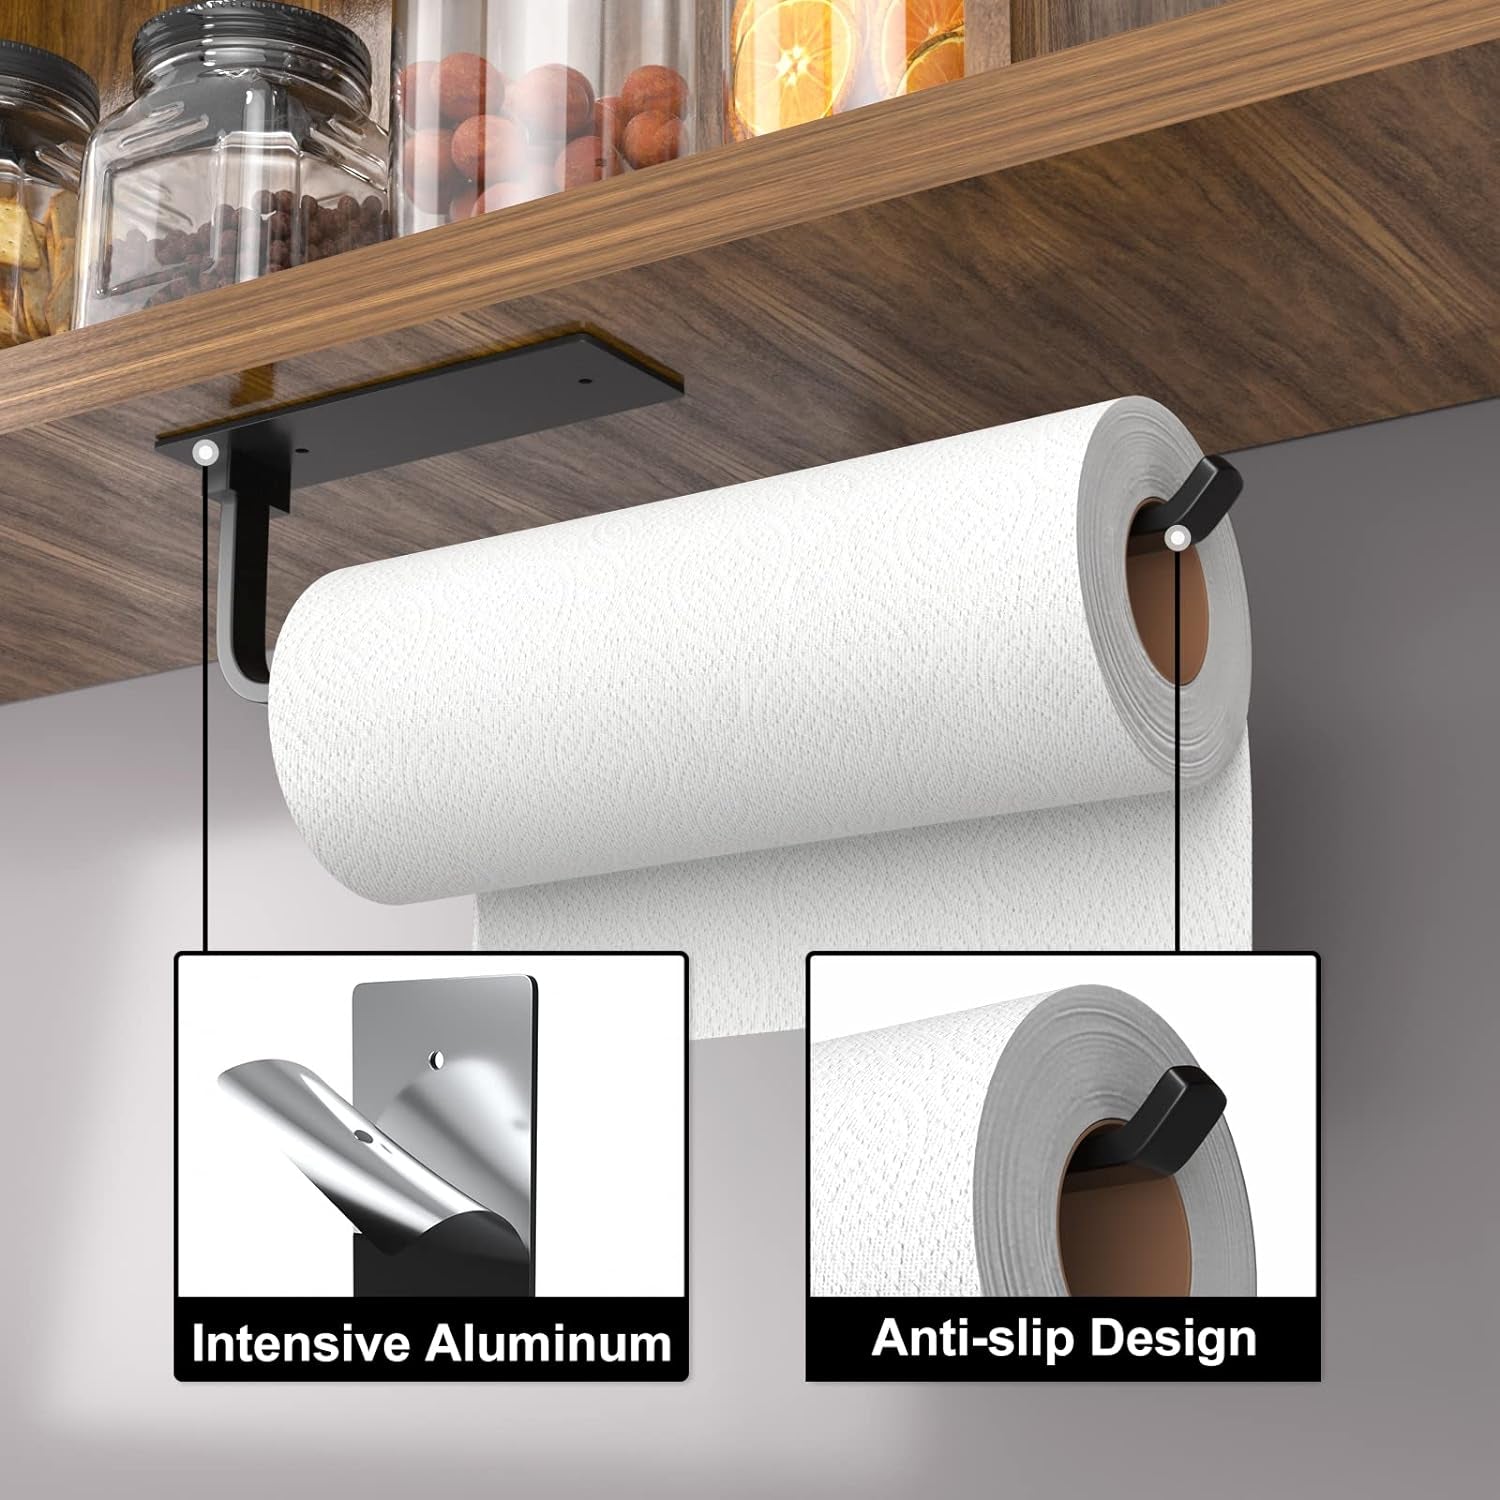 Paper Towel Holder - Self-Adhesive or Drilling, Matte Black Paper Towel Rack under Cabinet for Kitchen, Upgraded Aluminum Kitchen Roll Holder - Lighter but Stronger than Stainless Steel!